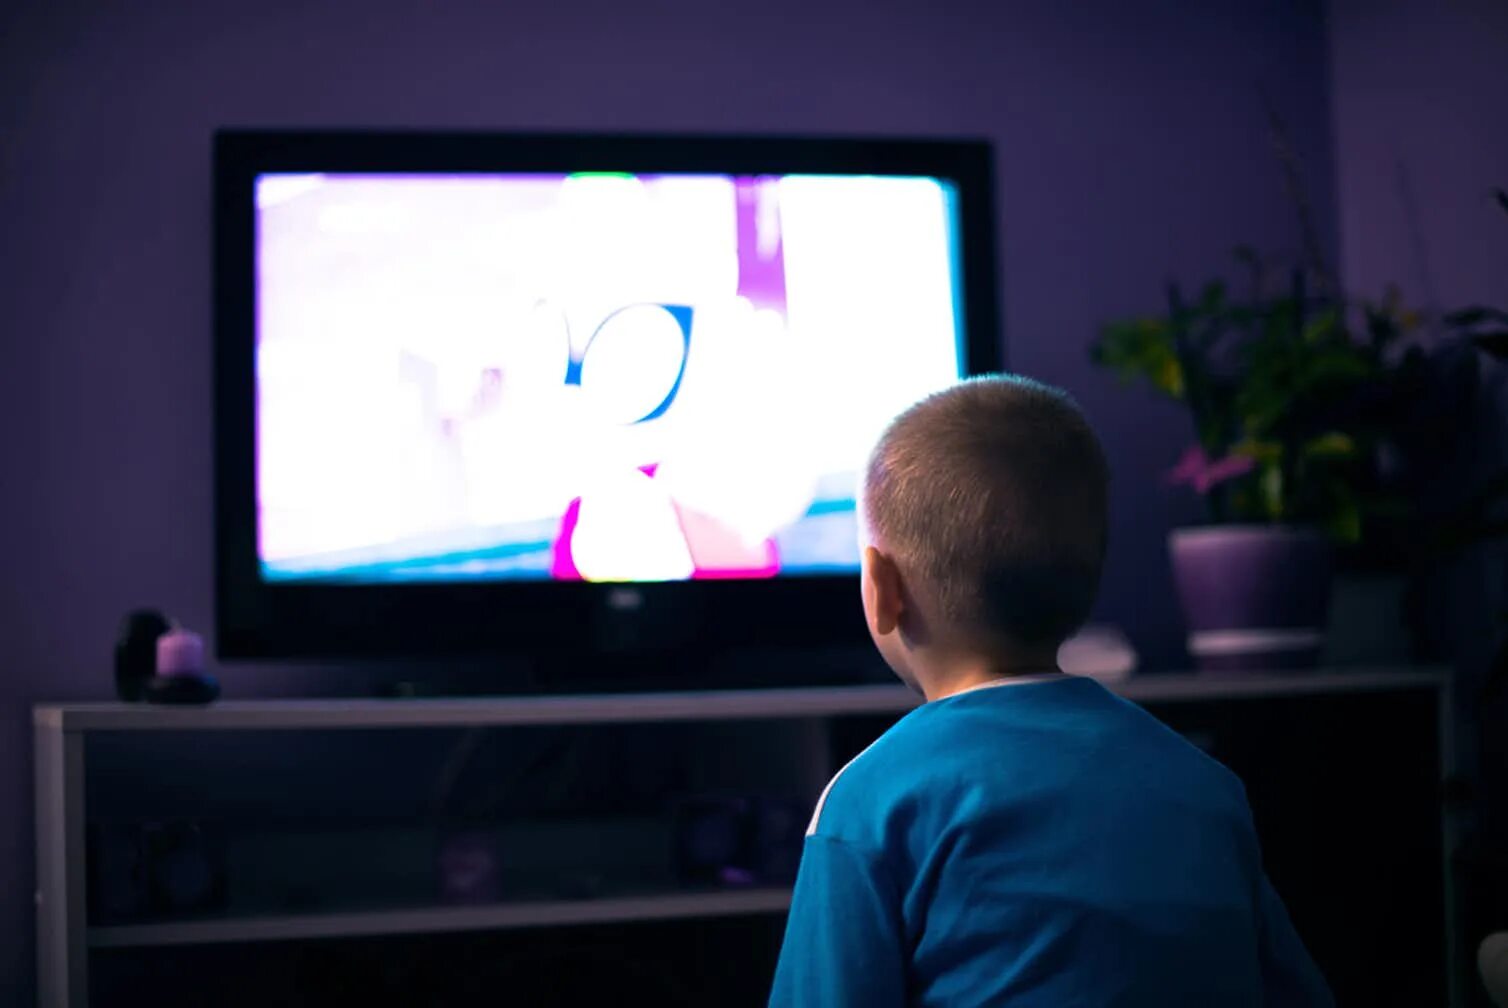 Дети перед телевизором. Мальчик у телевизора. Телевизор в темноте. Школьник у телевизора. Телевизор для детей.